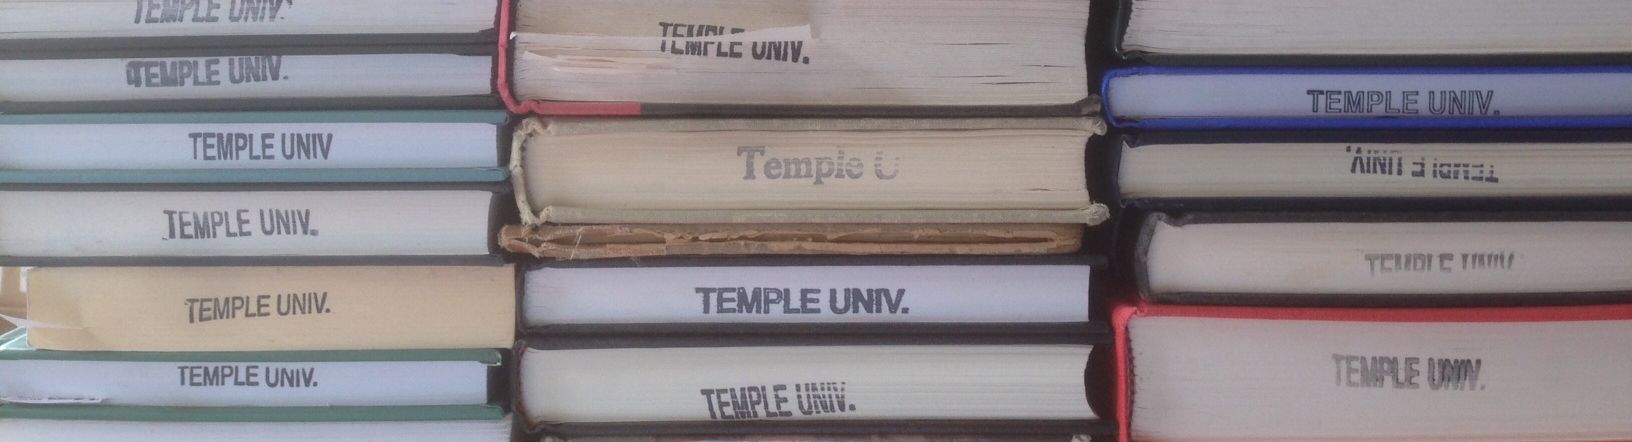 temple university creative writing minor